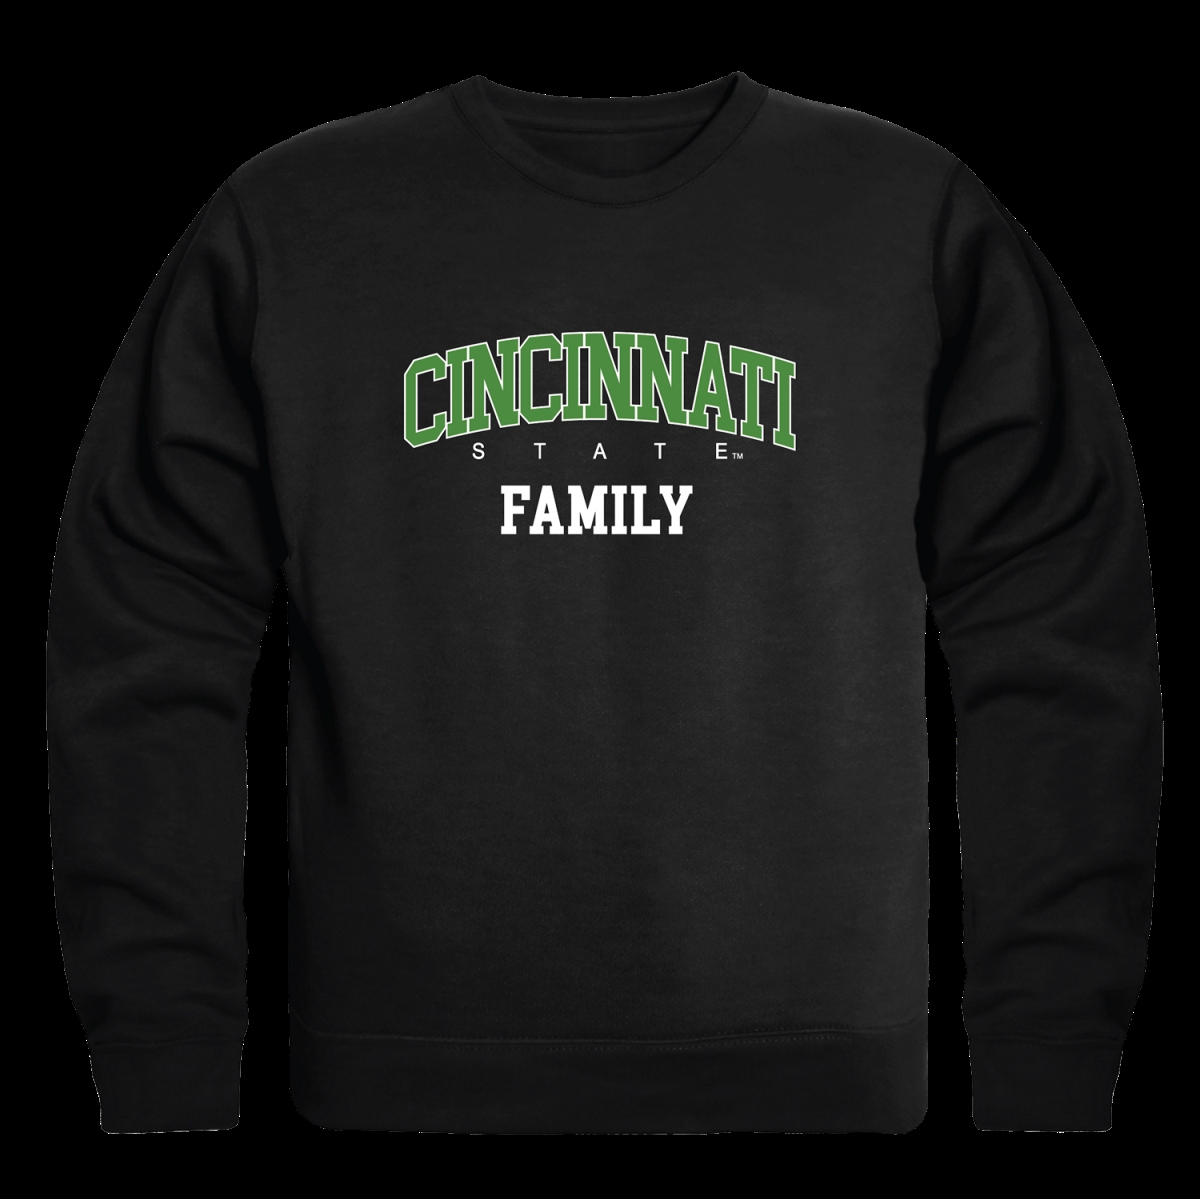 W Republic 572-632-BLK-02 Cincinnati State Technical & Community College Family Crewneck Sweatshirt&#44; Black - Medium